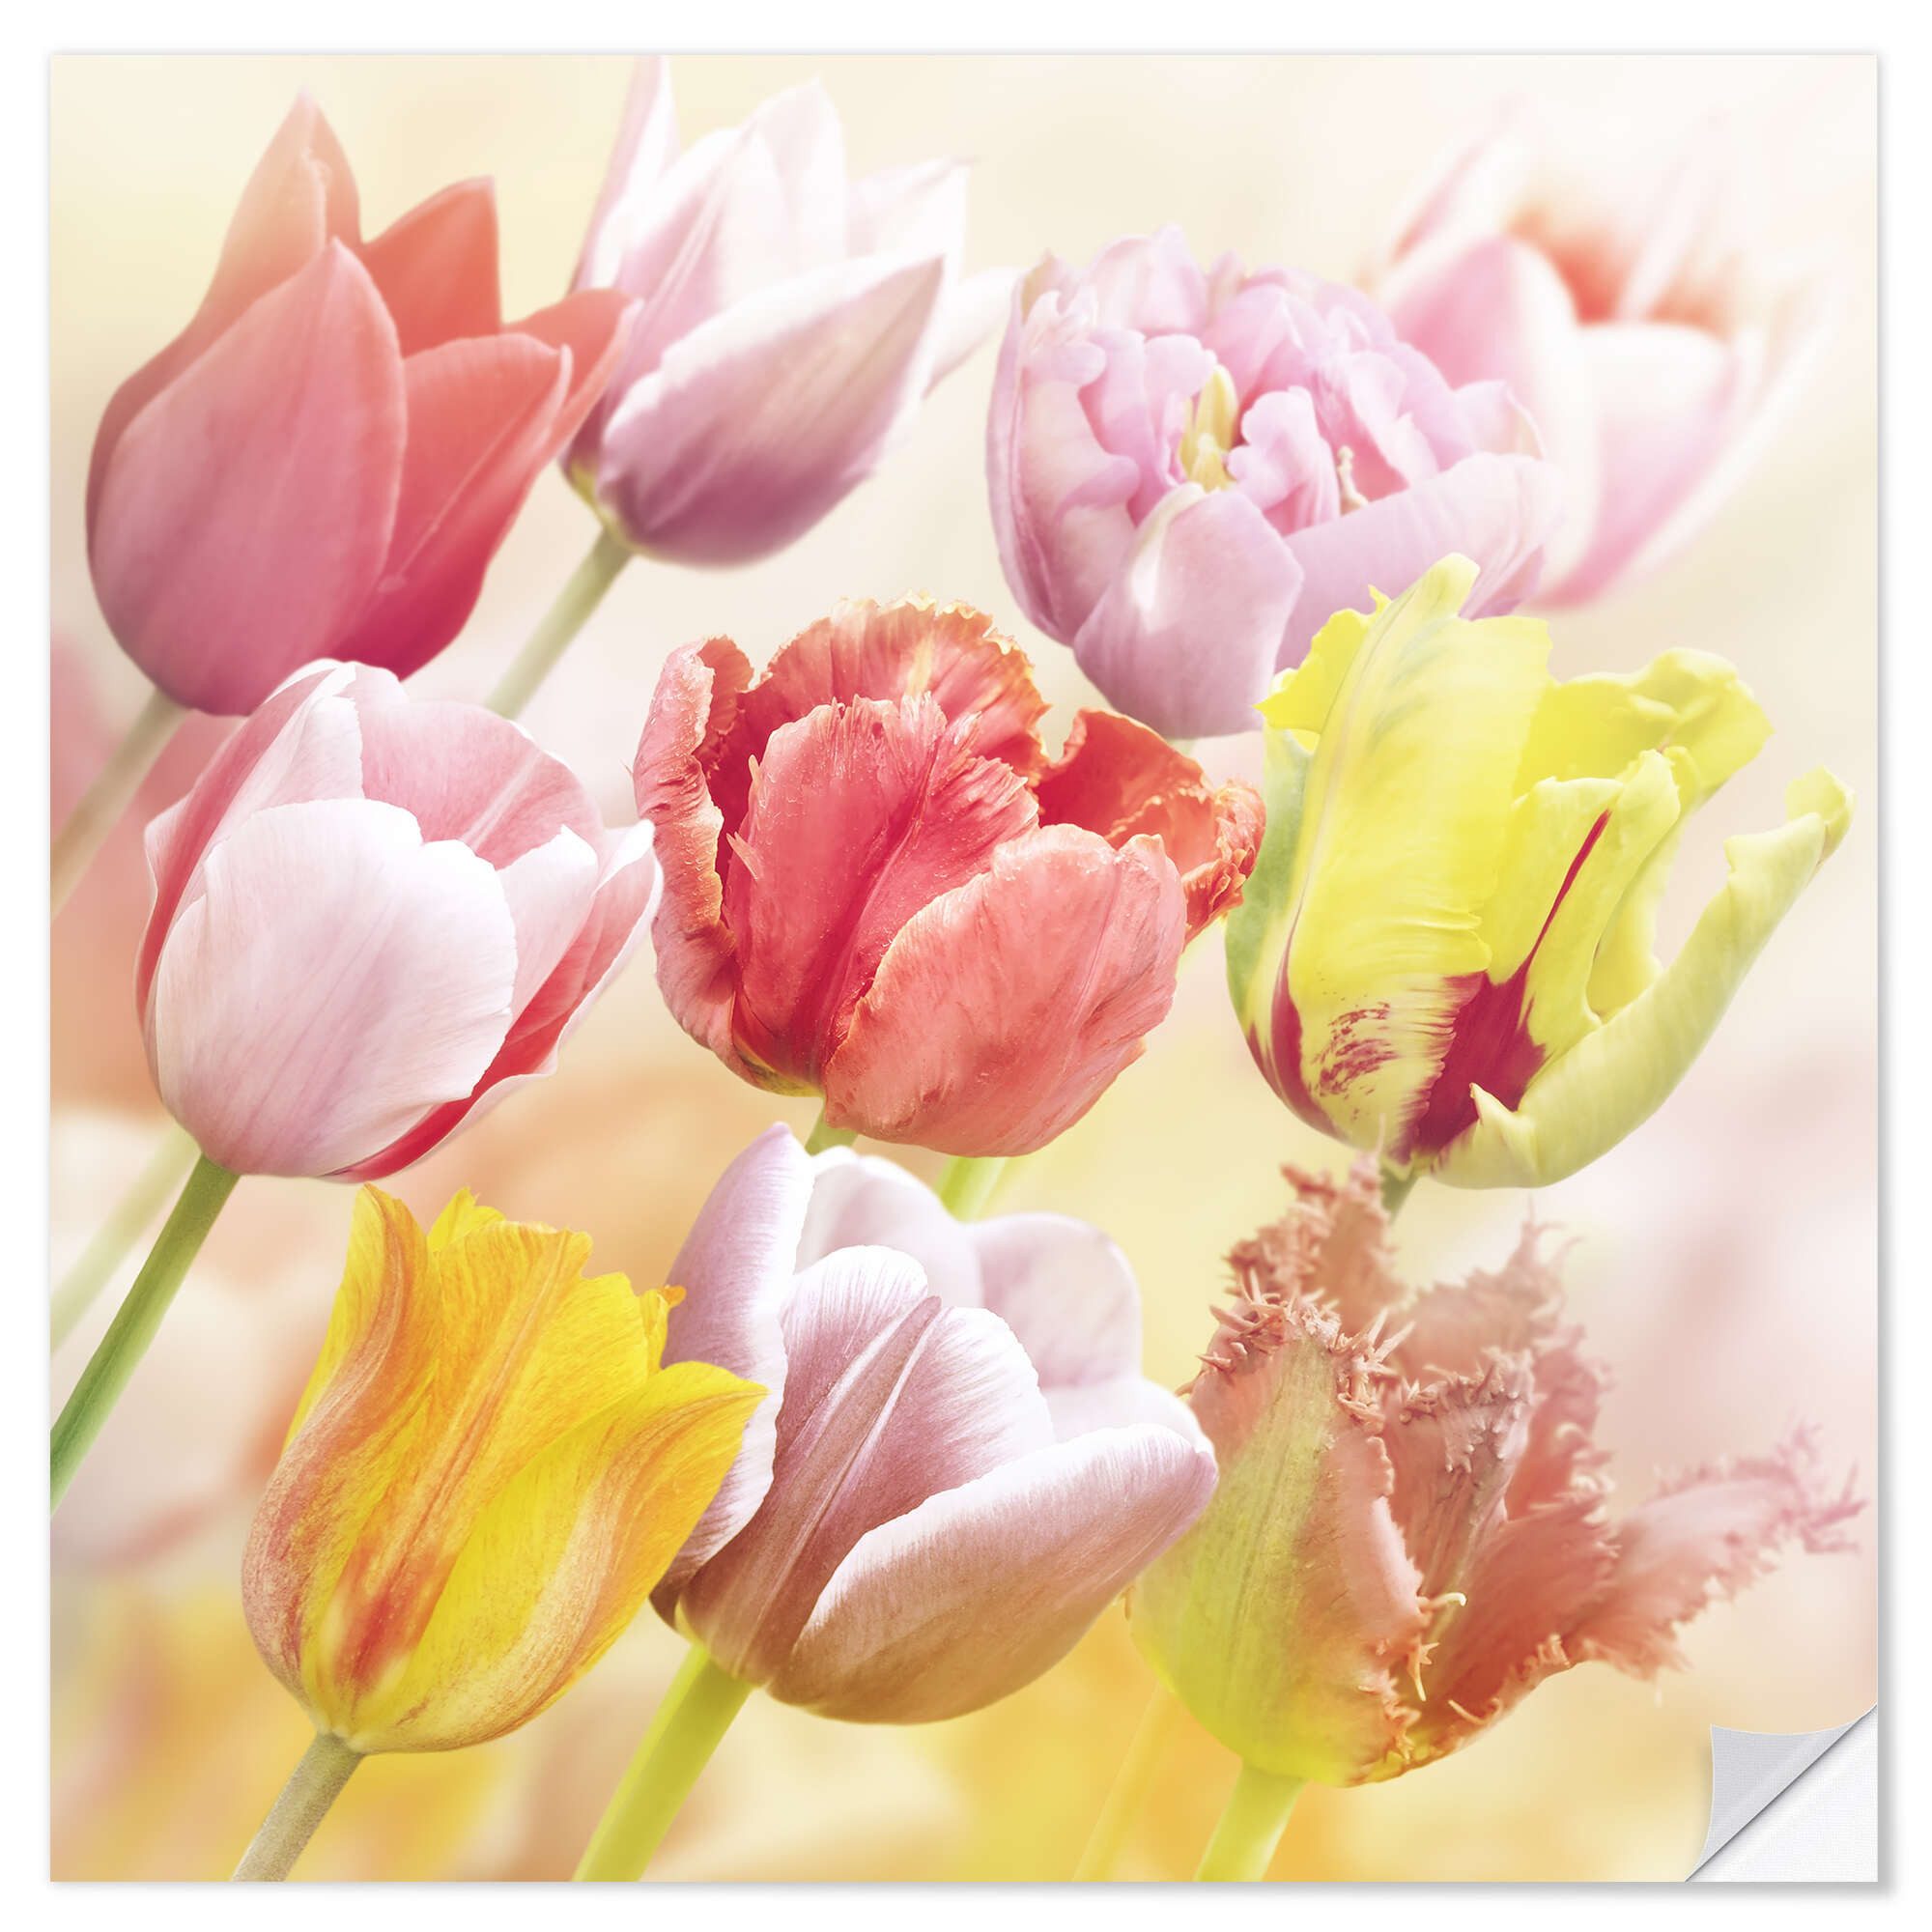 Posterlounge Wandfolie Editors Choice, Verschiedene Tulpen, Fotografie